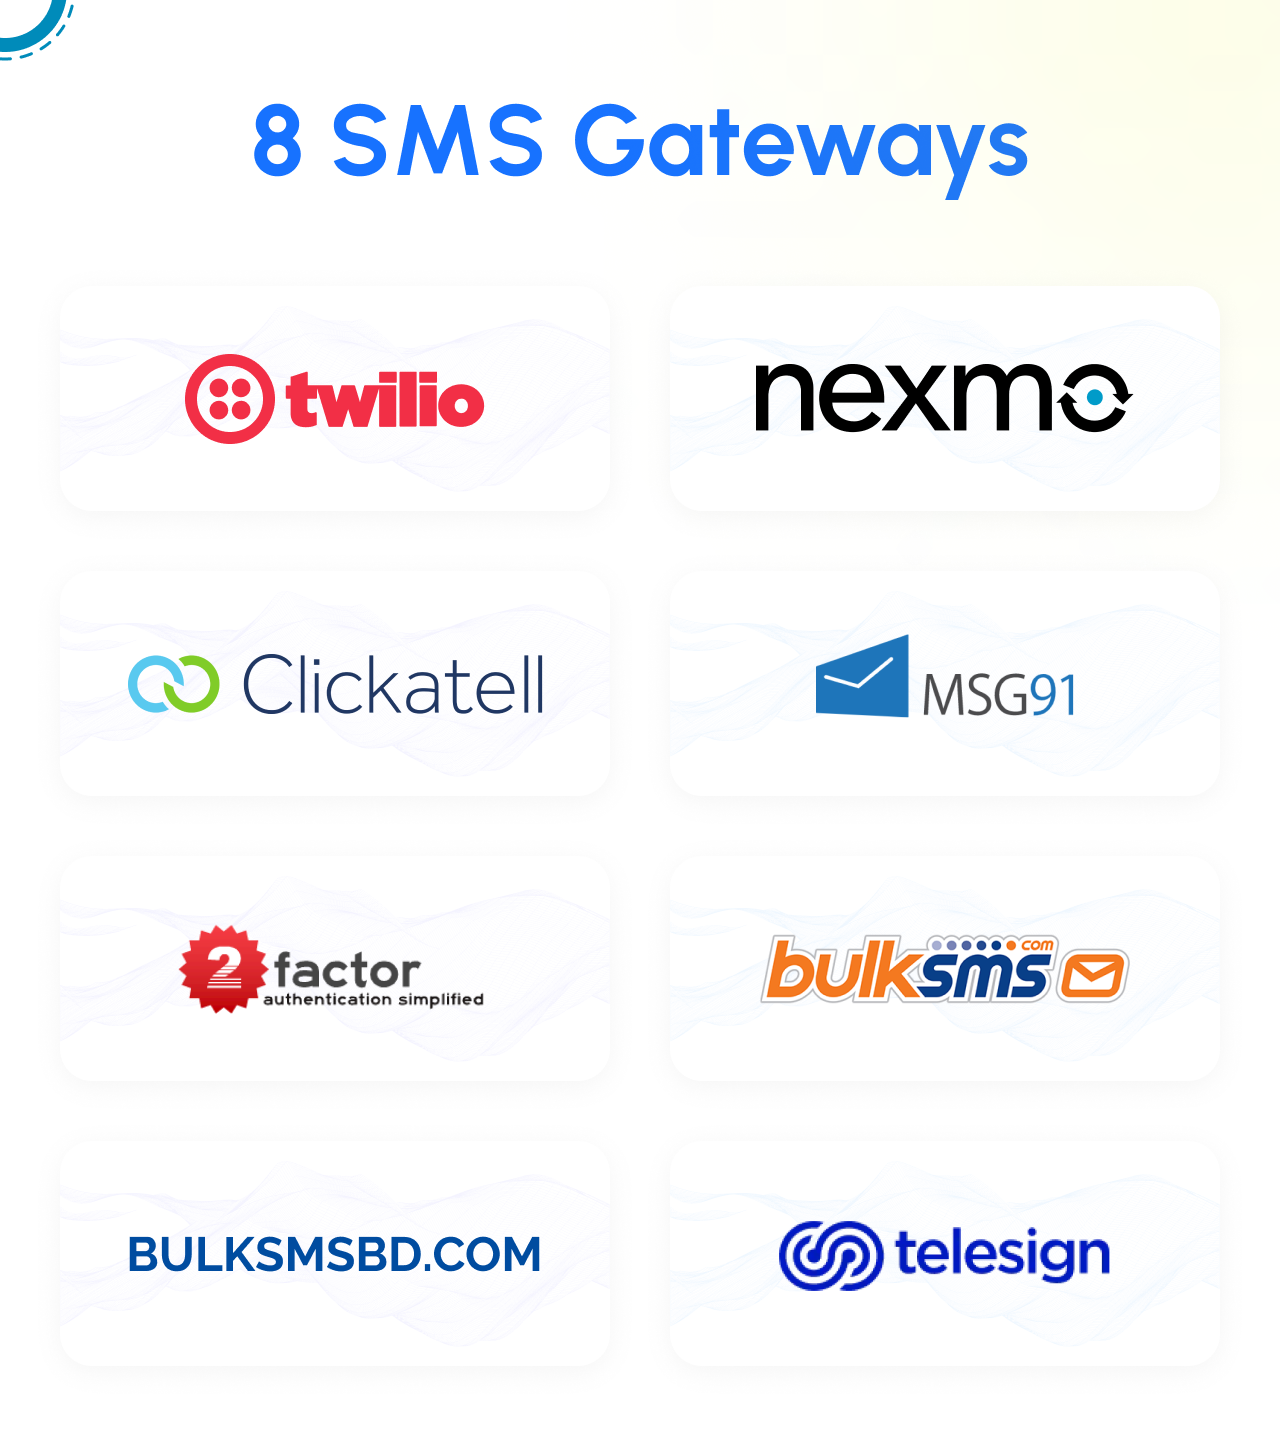 8 sms gateway integrated, twilio, nexmo, bulksmsbd, buiksms, 2factor, telesign, clickatell, msg91